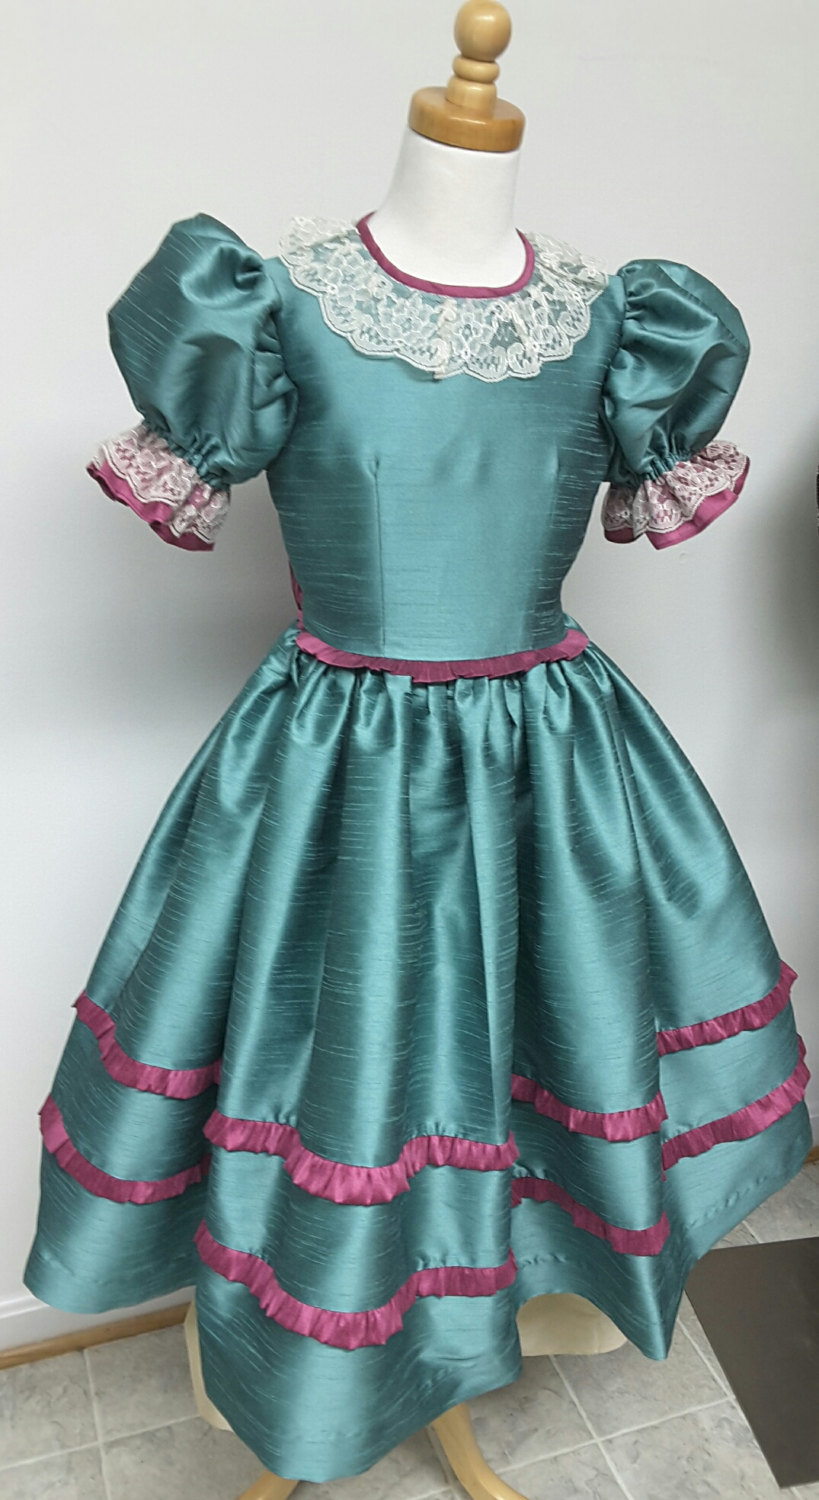 زفاف - Princess Girl Dress with Ruffles, Lace, and Puffy Sleeves, Girls Victorian Style Dress. Weddings, Birthday. Party. Ballet.